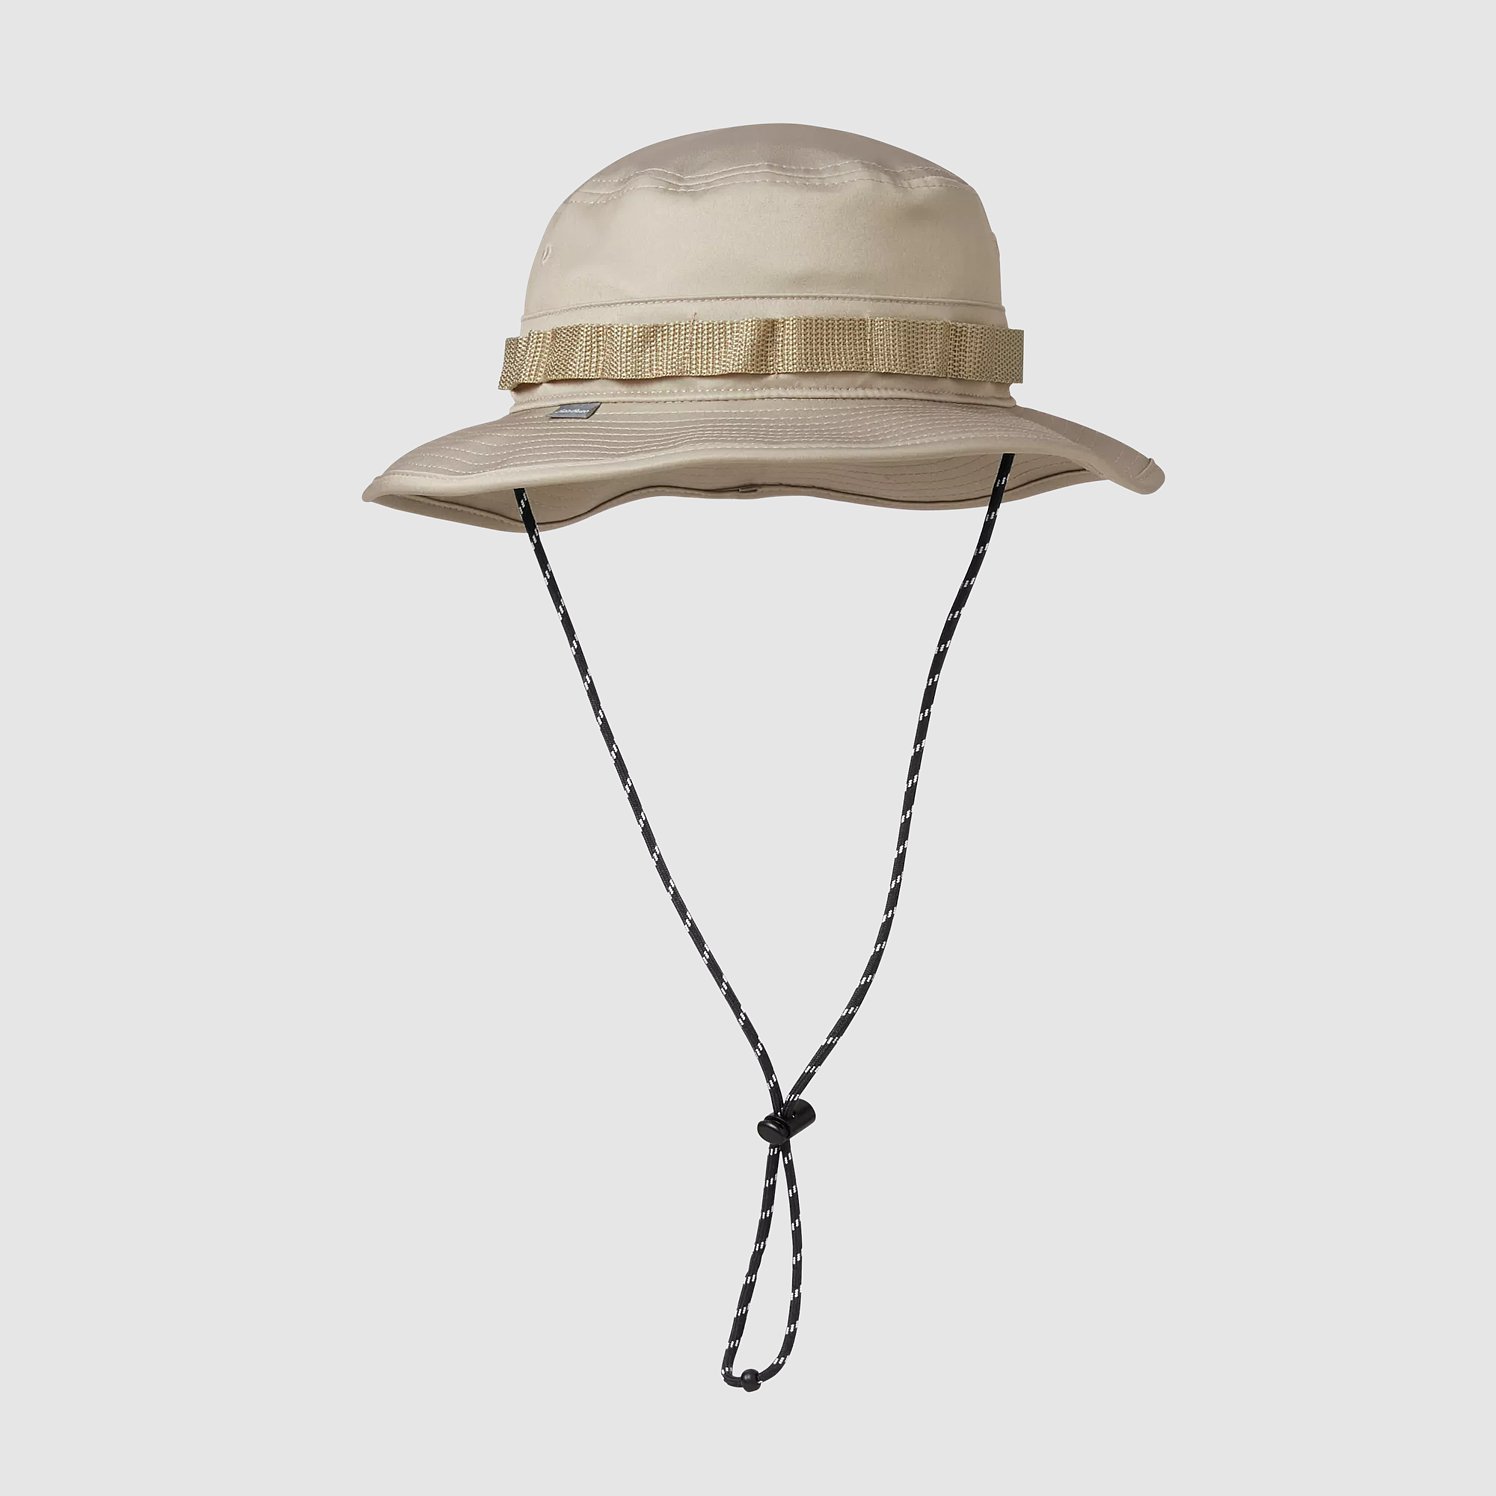 Eddie Bauer Men's Exploration UPF Bucket Hat - Light Khaki - L/XL